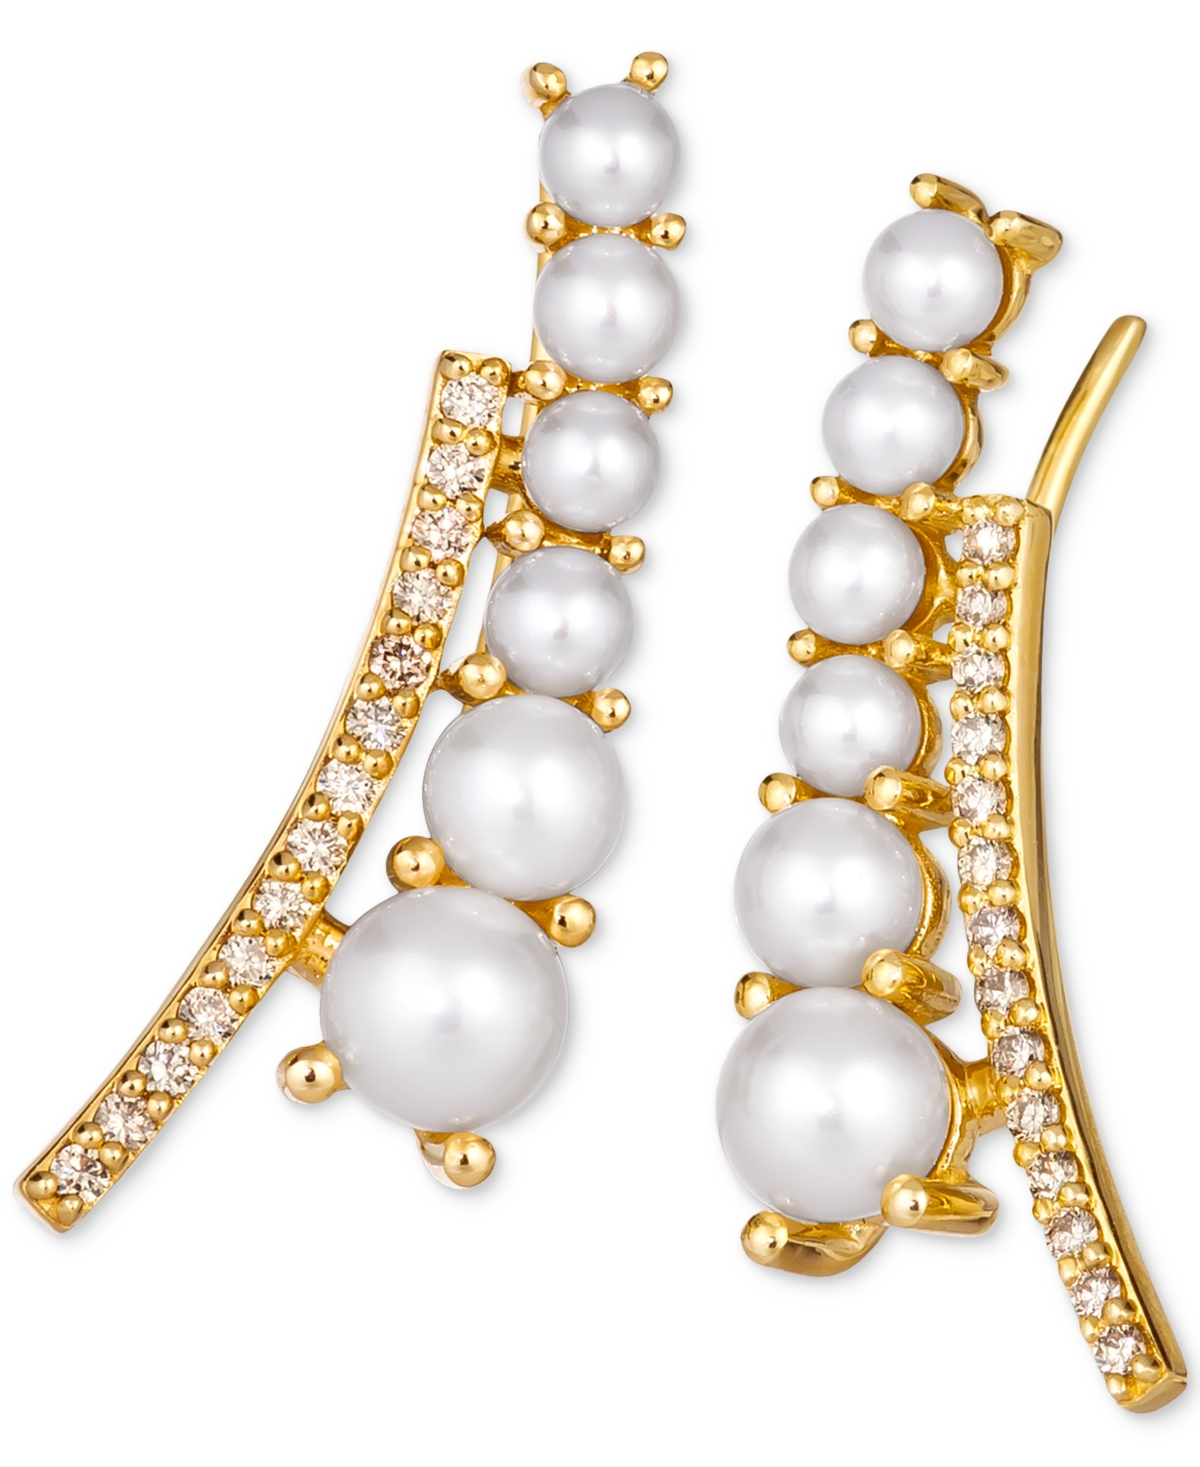 Vanilla Pearls (3-6mm) & Nude Diamond (1/4 ct. t.w.) Ear Climbers in 14k Gold - K Honey Gold Ear Climber